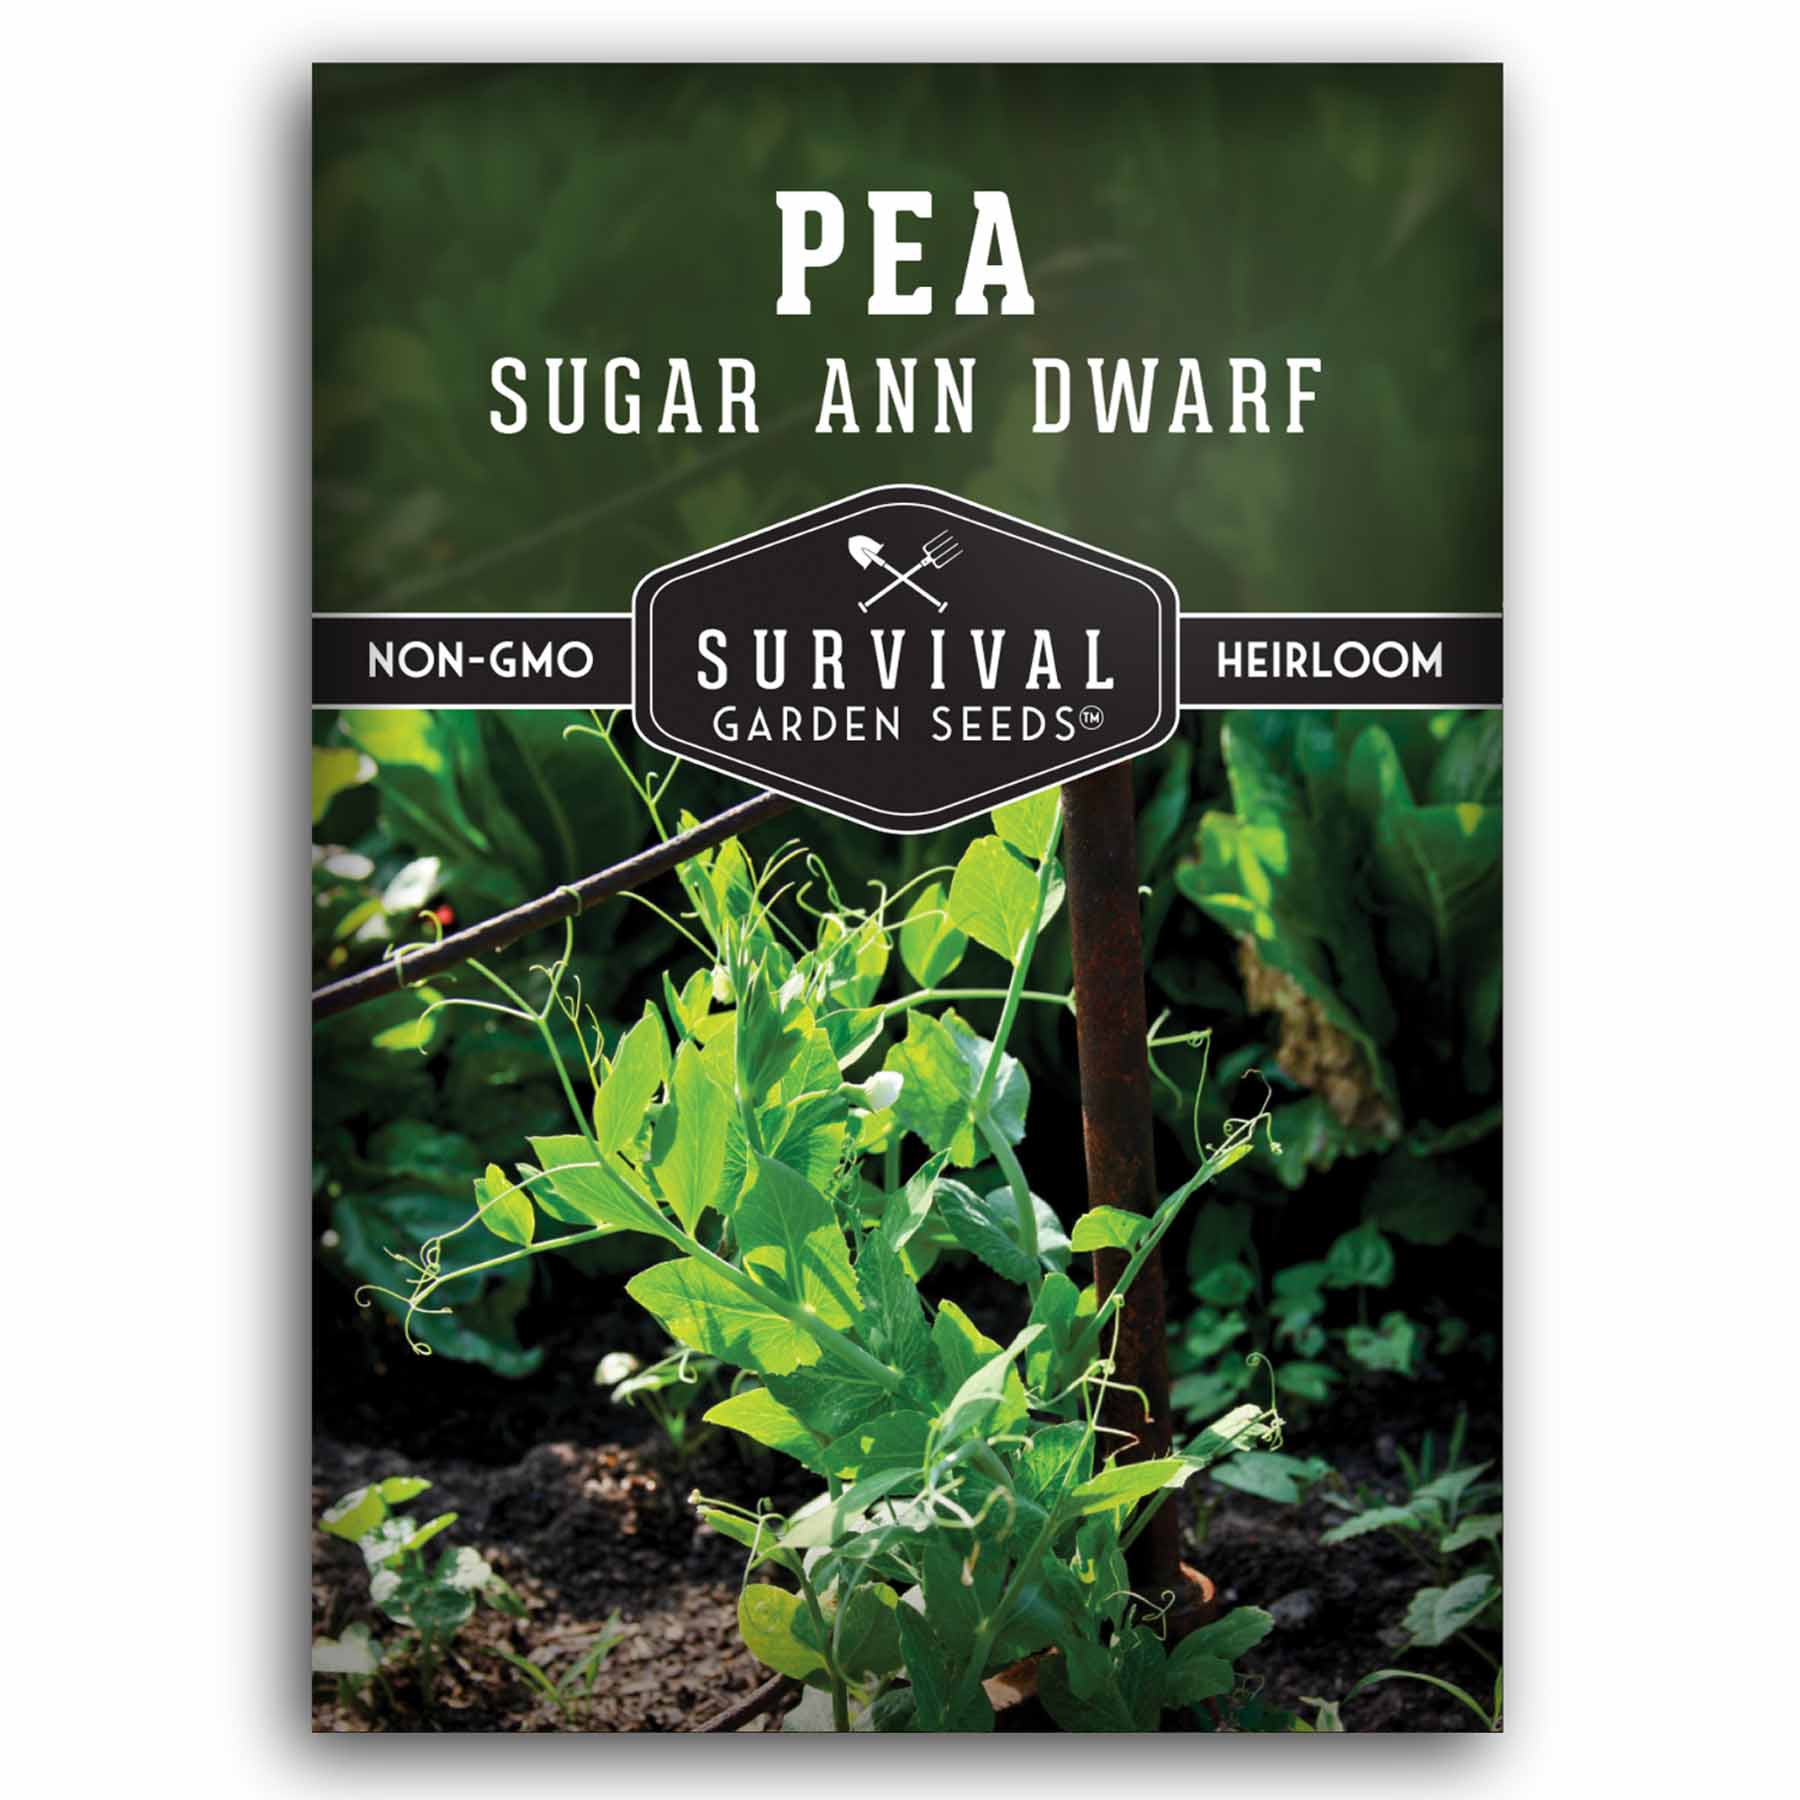 1 packet of Sugar Ann Dwarf Pea seeds